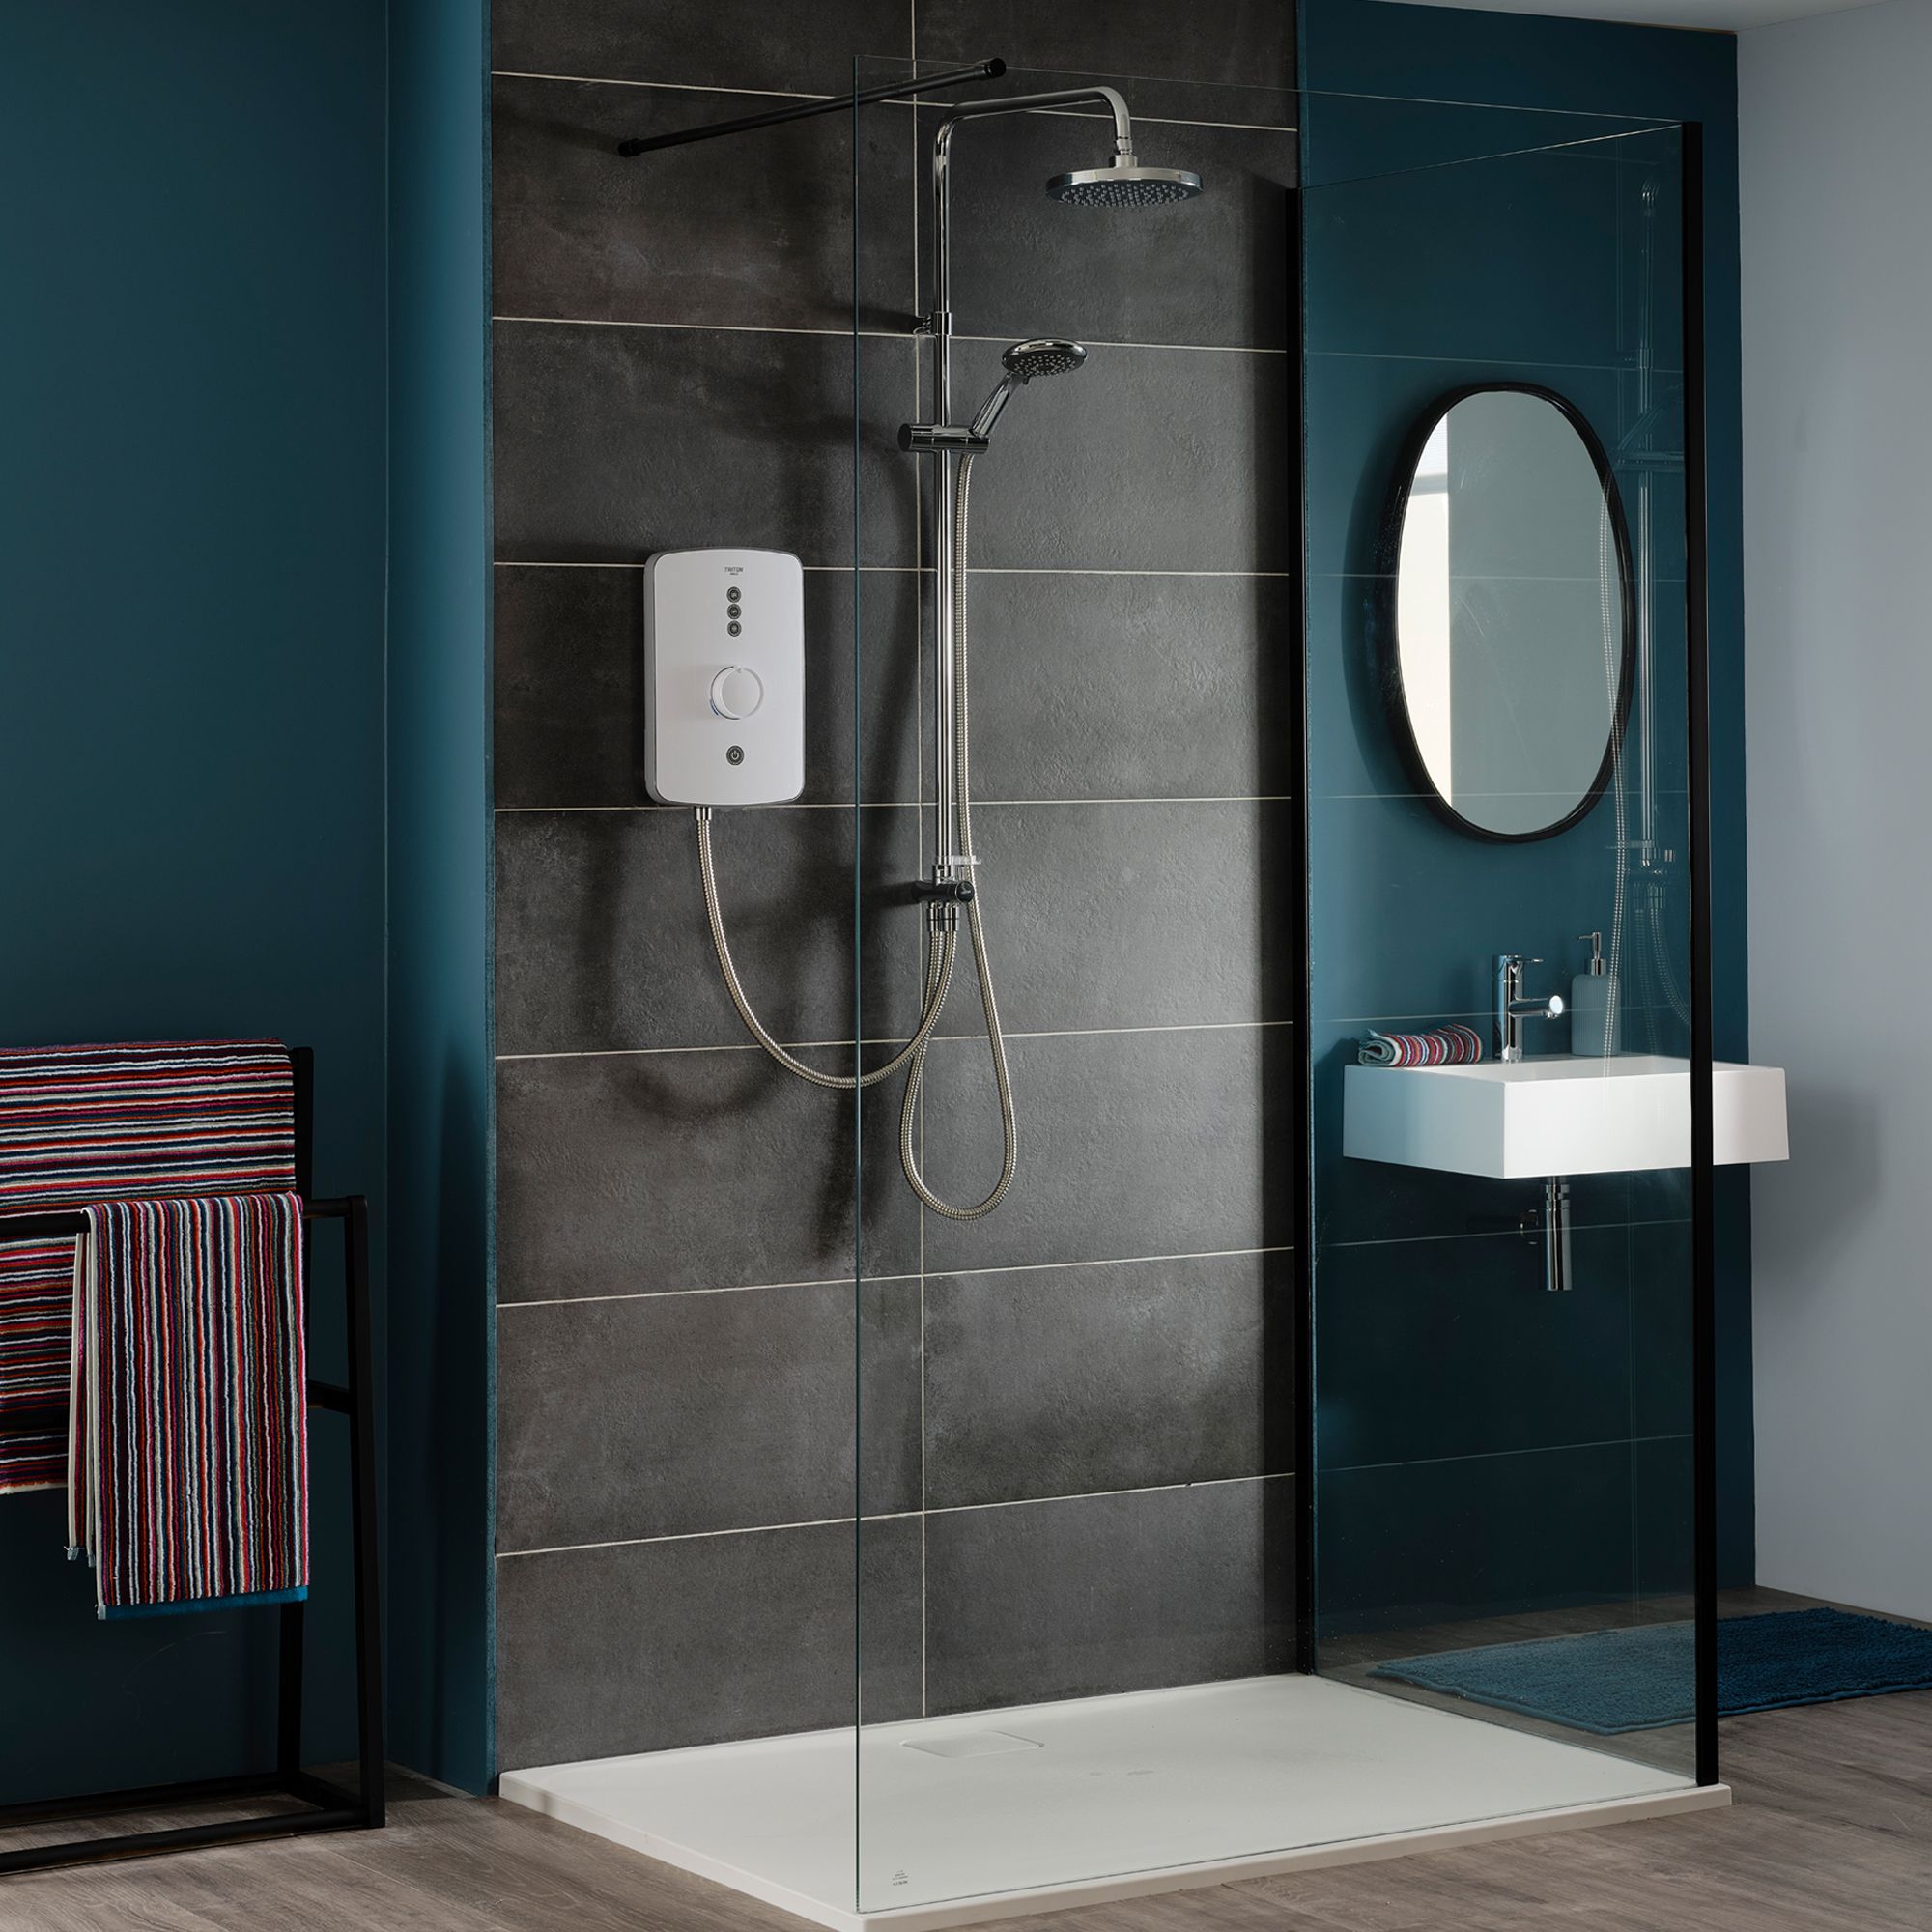 Triton Amala DuElec® White Manual Electric Shower, 9.5kW